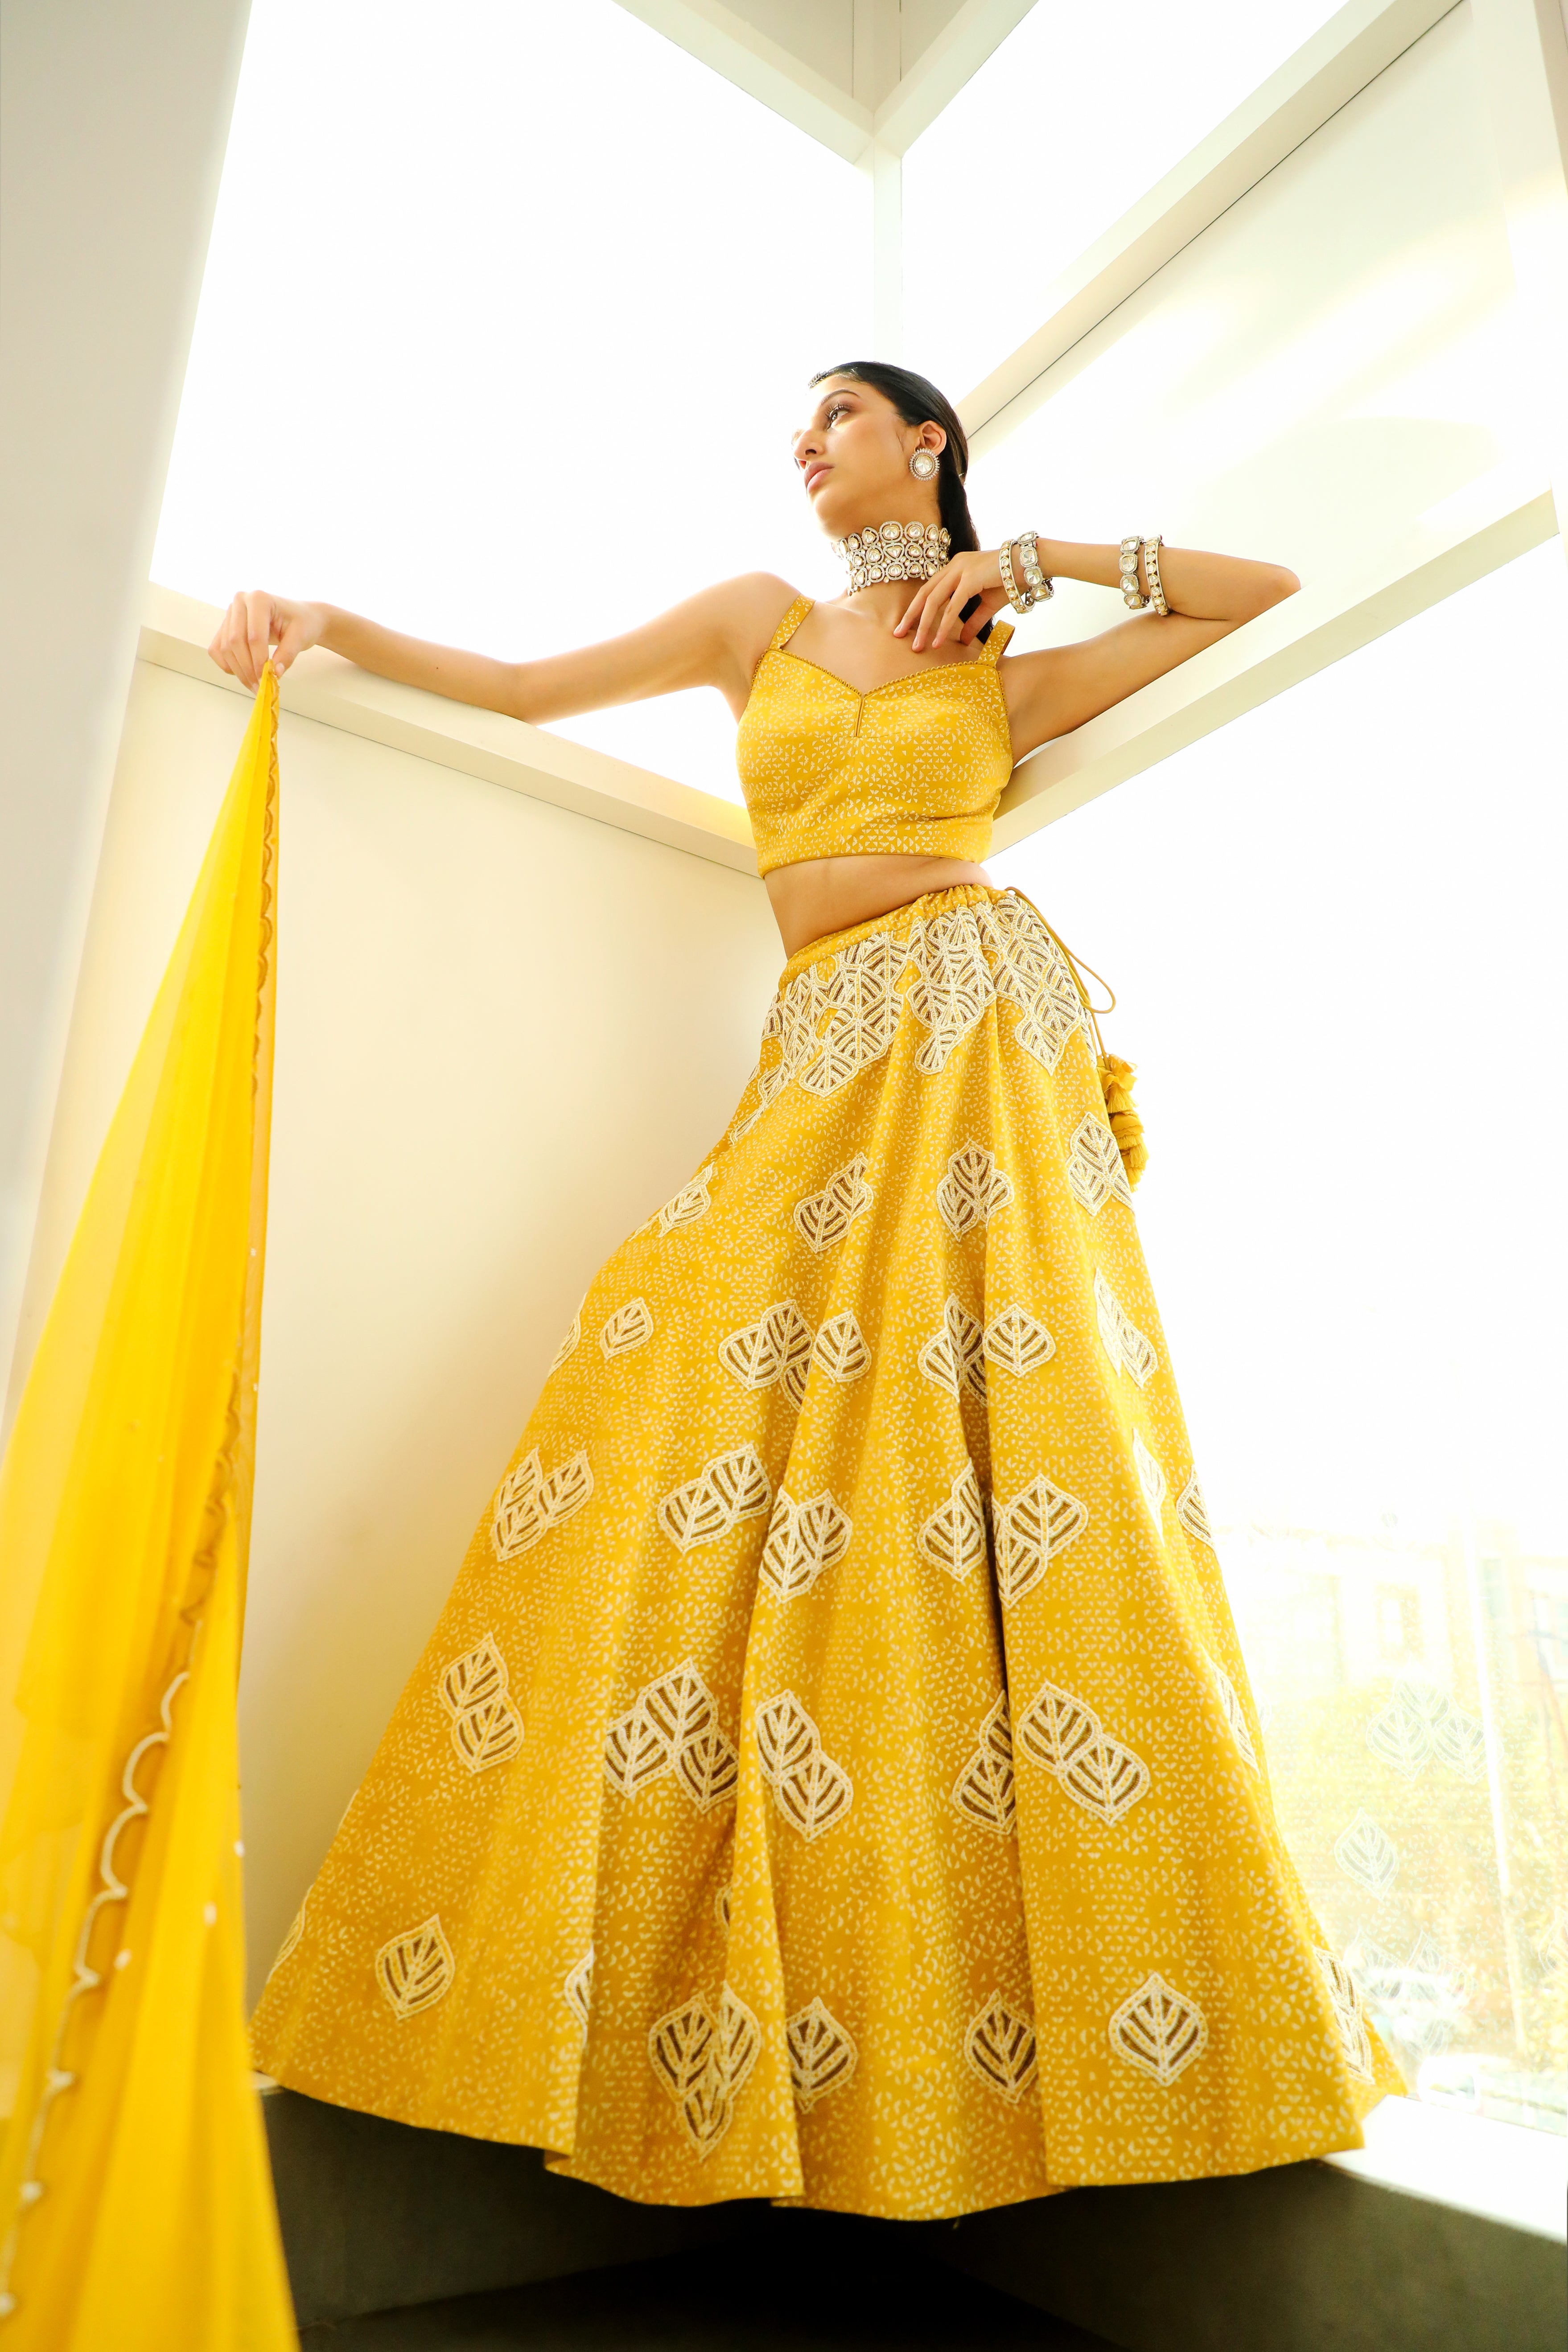 Vidushi Gupta - Sanaya - Canary Yellow Hand Embroidered Lehenga Set